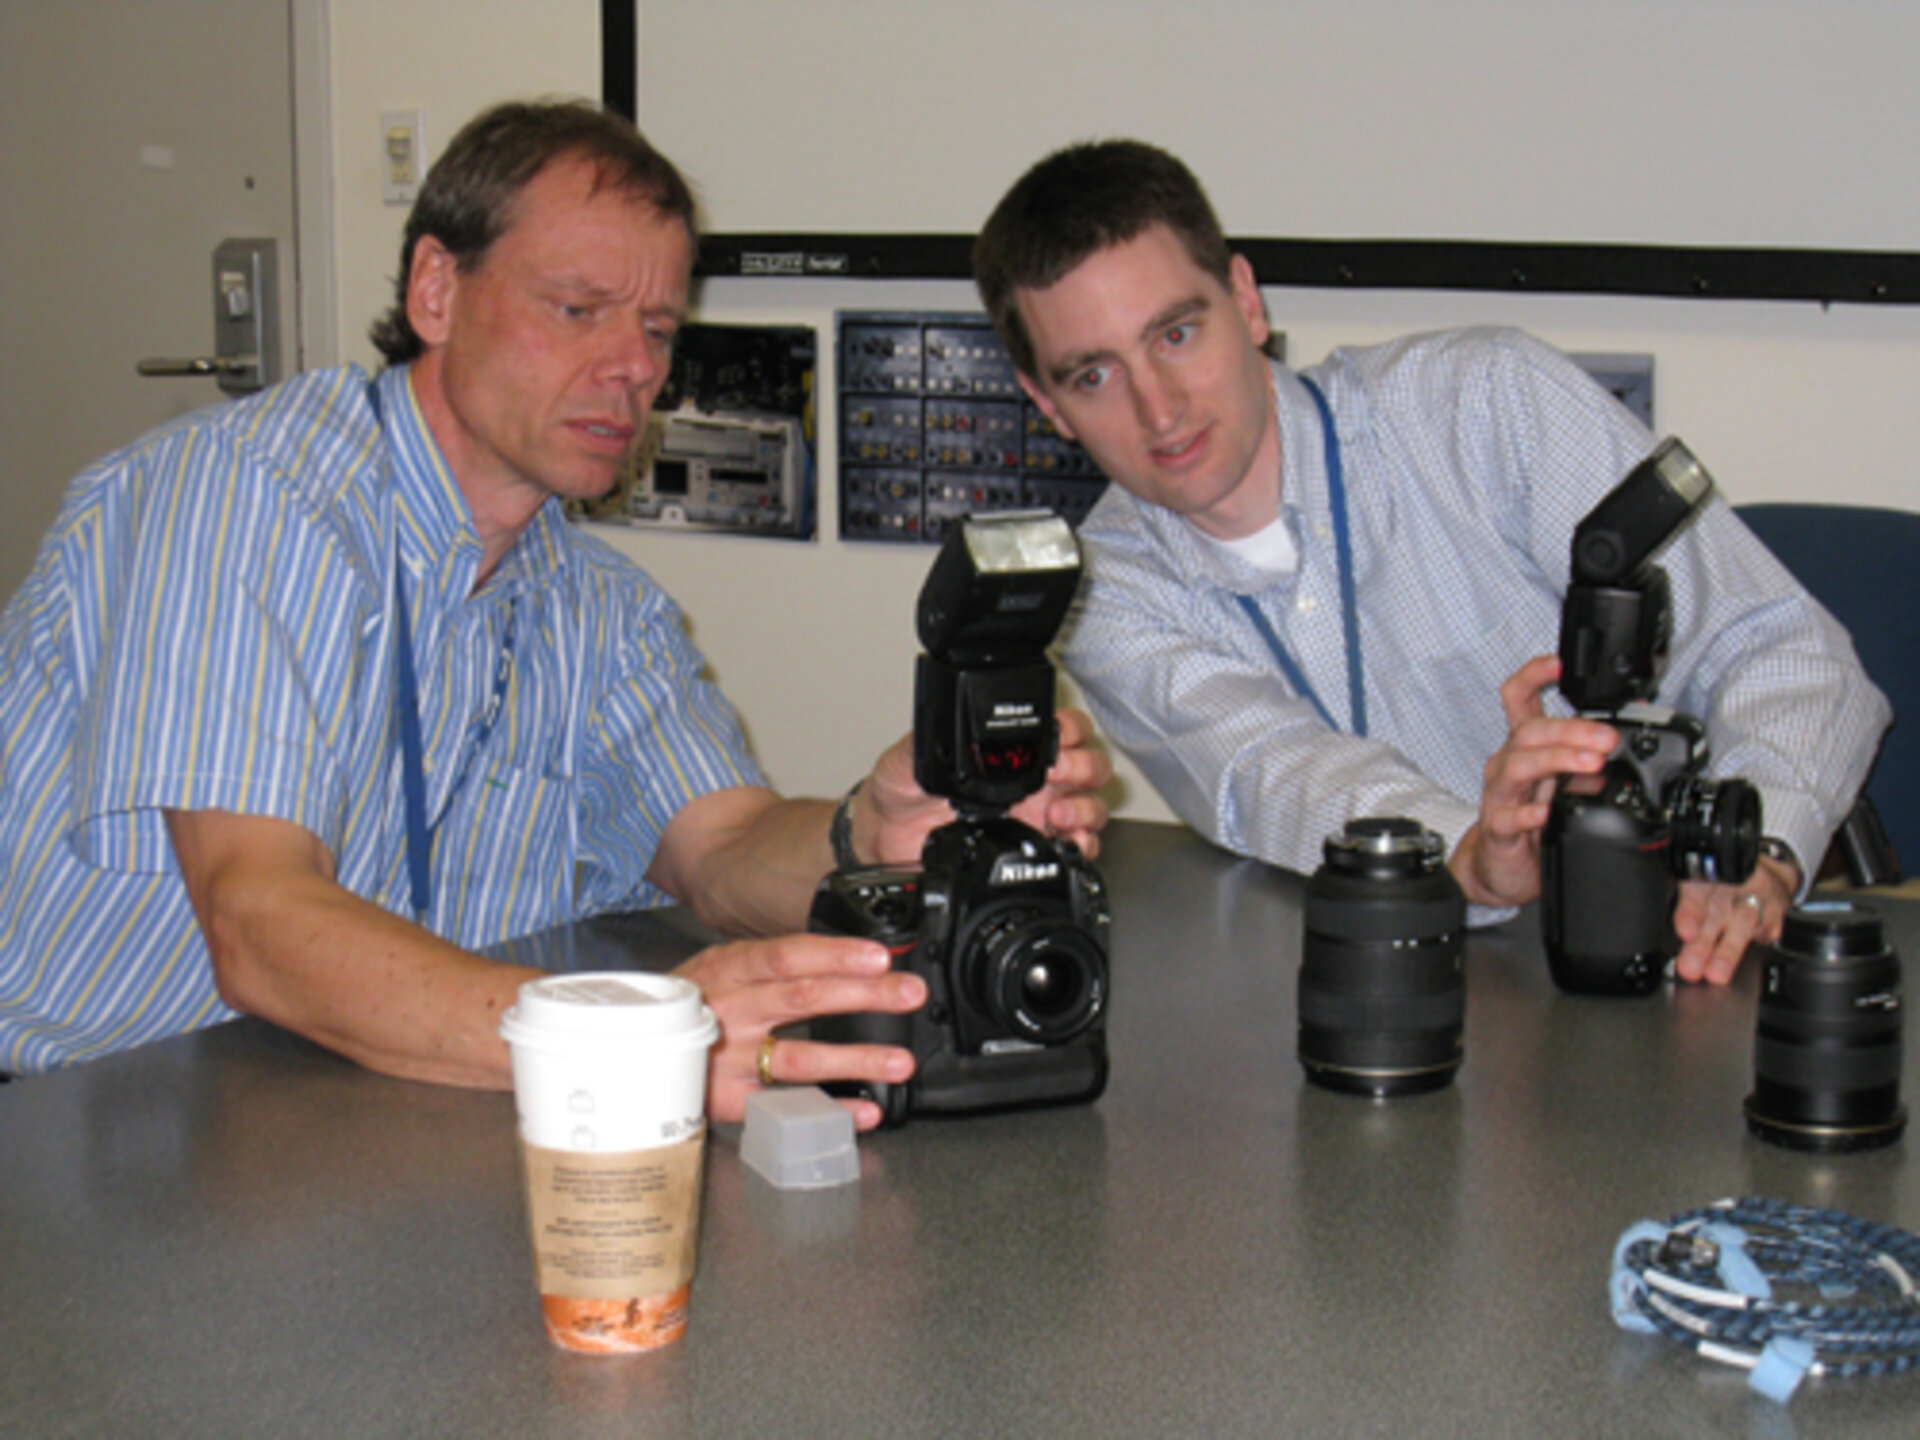 Kamerainsruktör Paul Reichert visar mig hur Nikon D2XS fungerar.